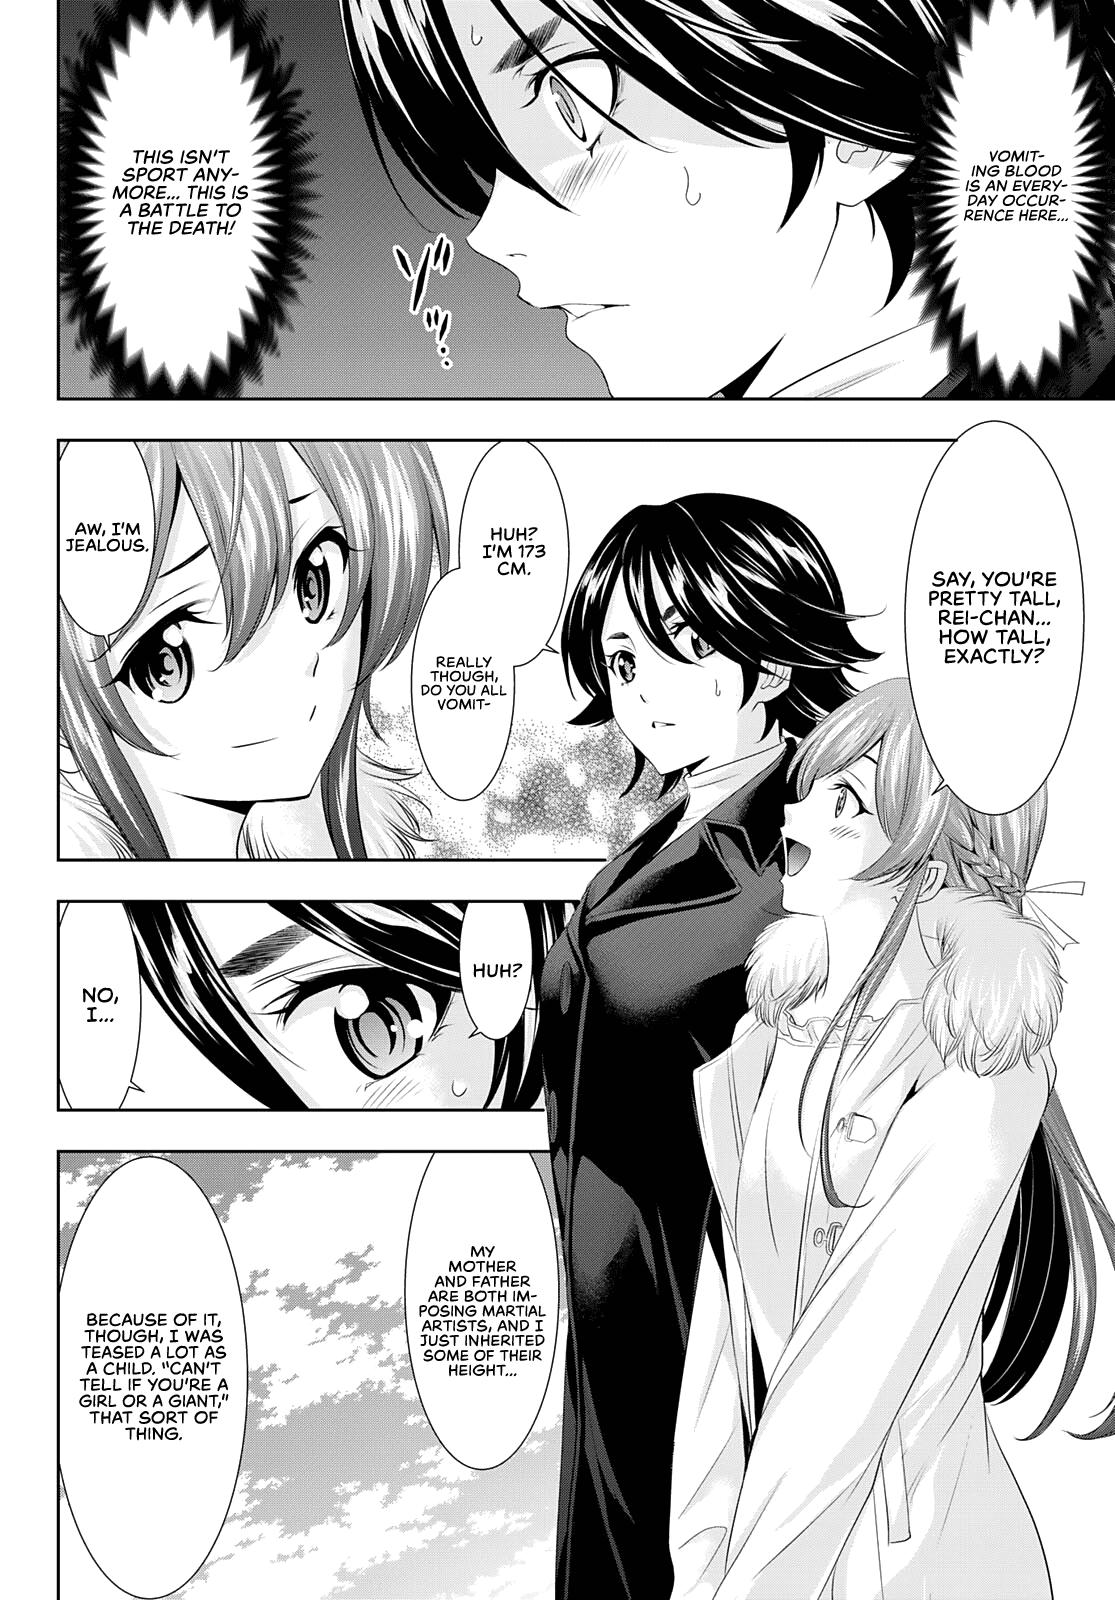 Goddess Café Terrace Manga Chapter 127